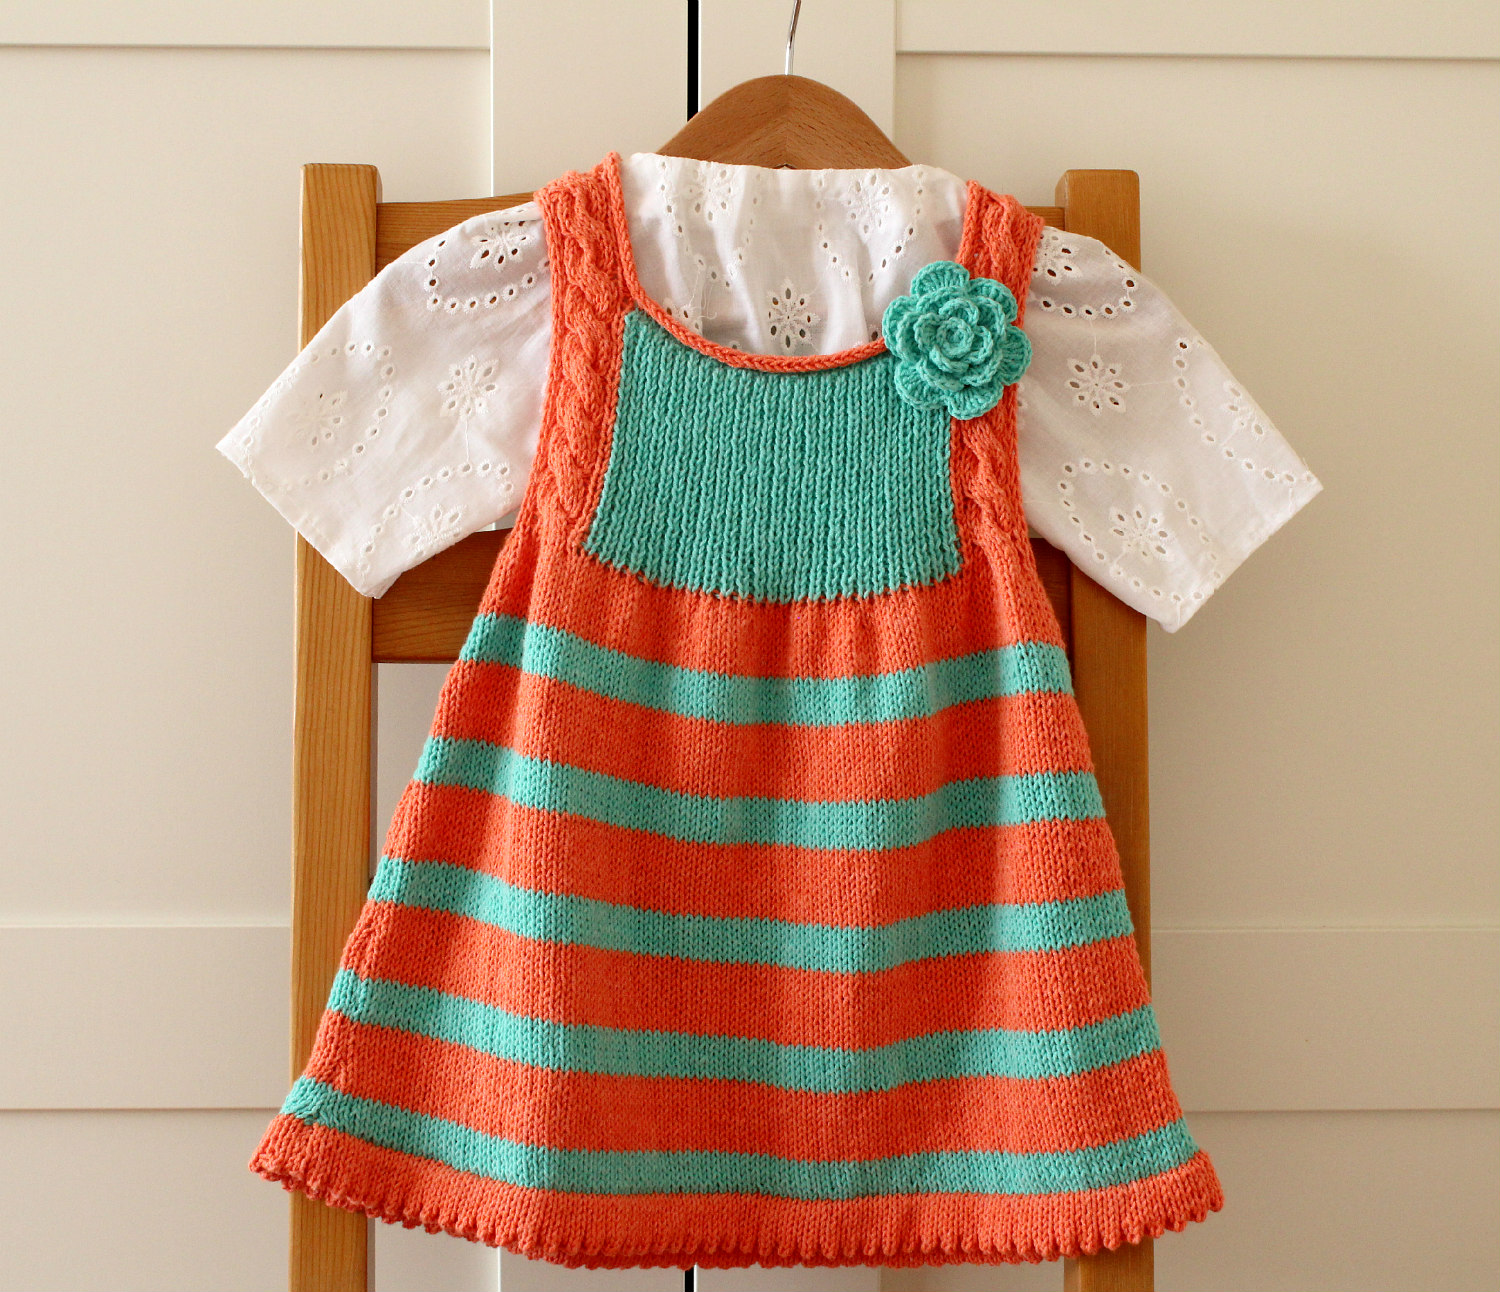 Emily Baby Dress stripes baby dress with crochet flower baby knitting pattern by Lilia Vanini / Liliacraftparty